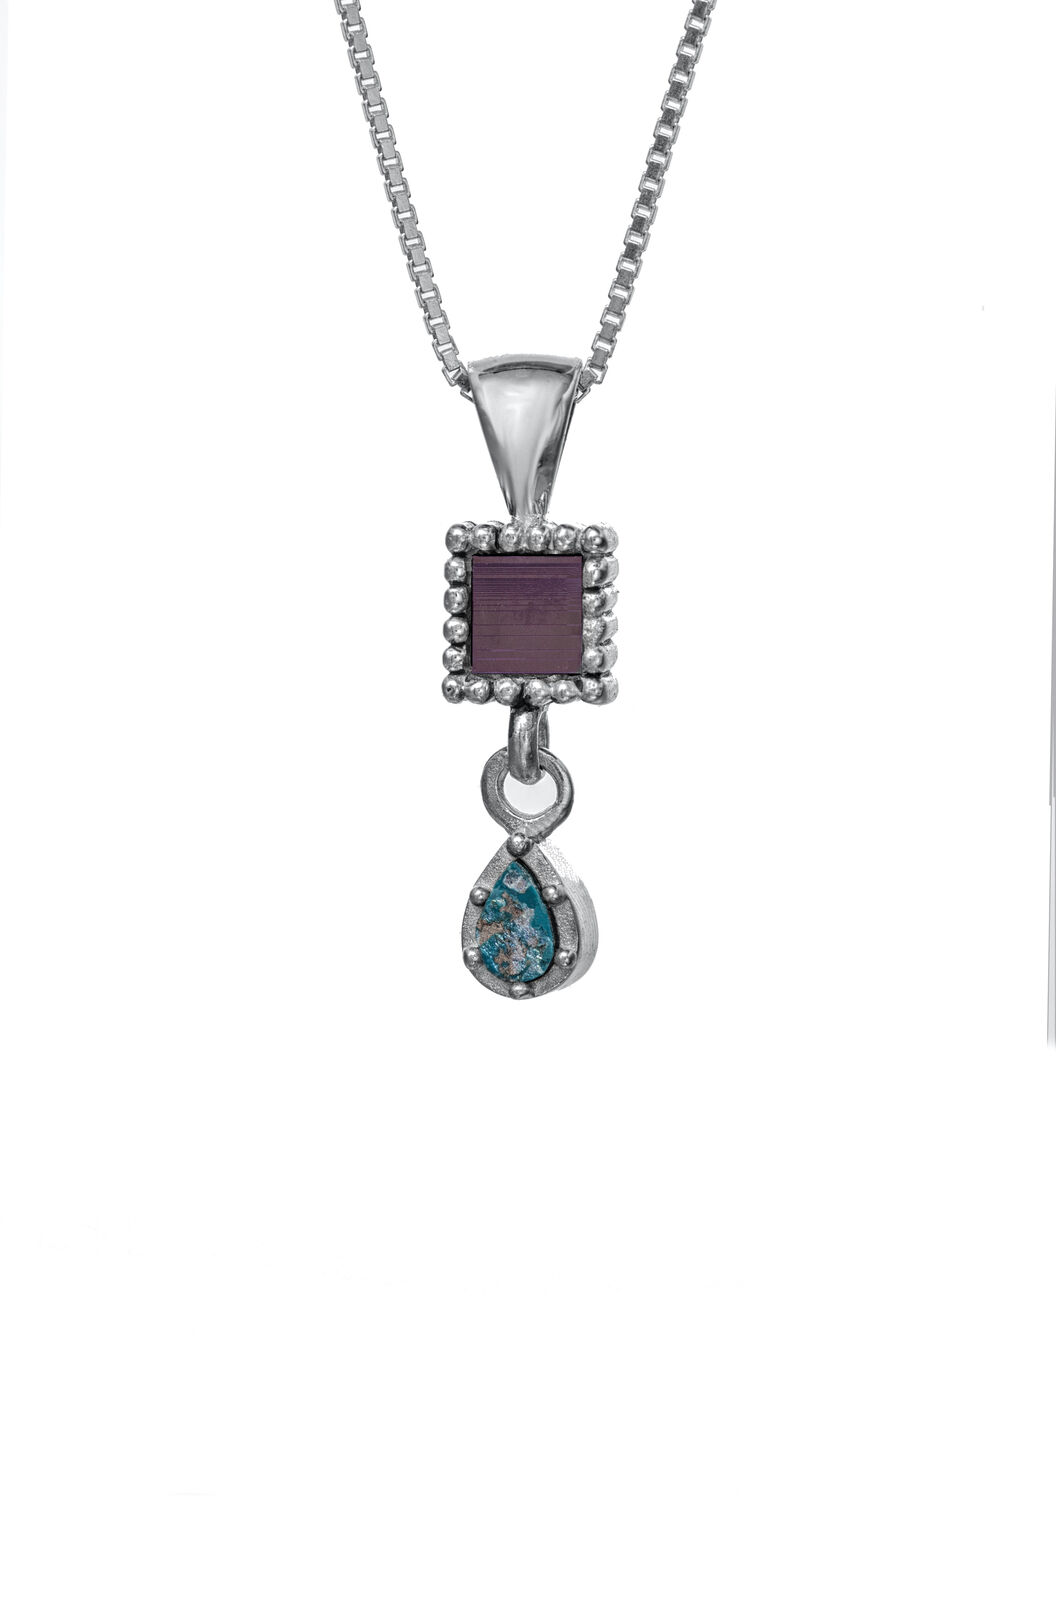 Jerusalem Nano Bible Torah Pendant with Drop of Roman Glass Necklace Silver 925